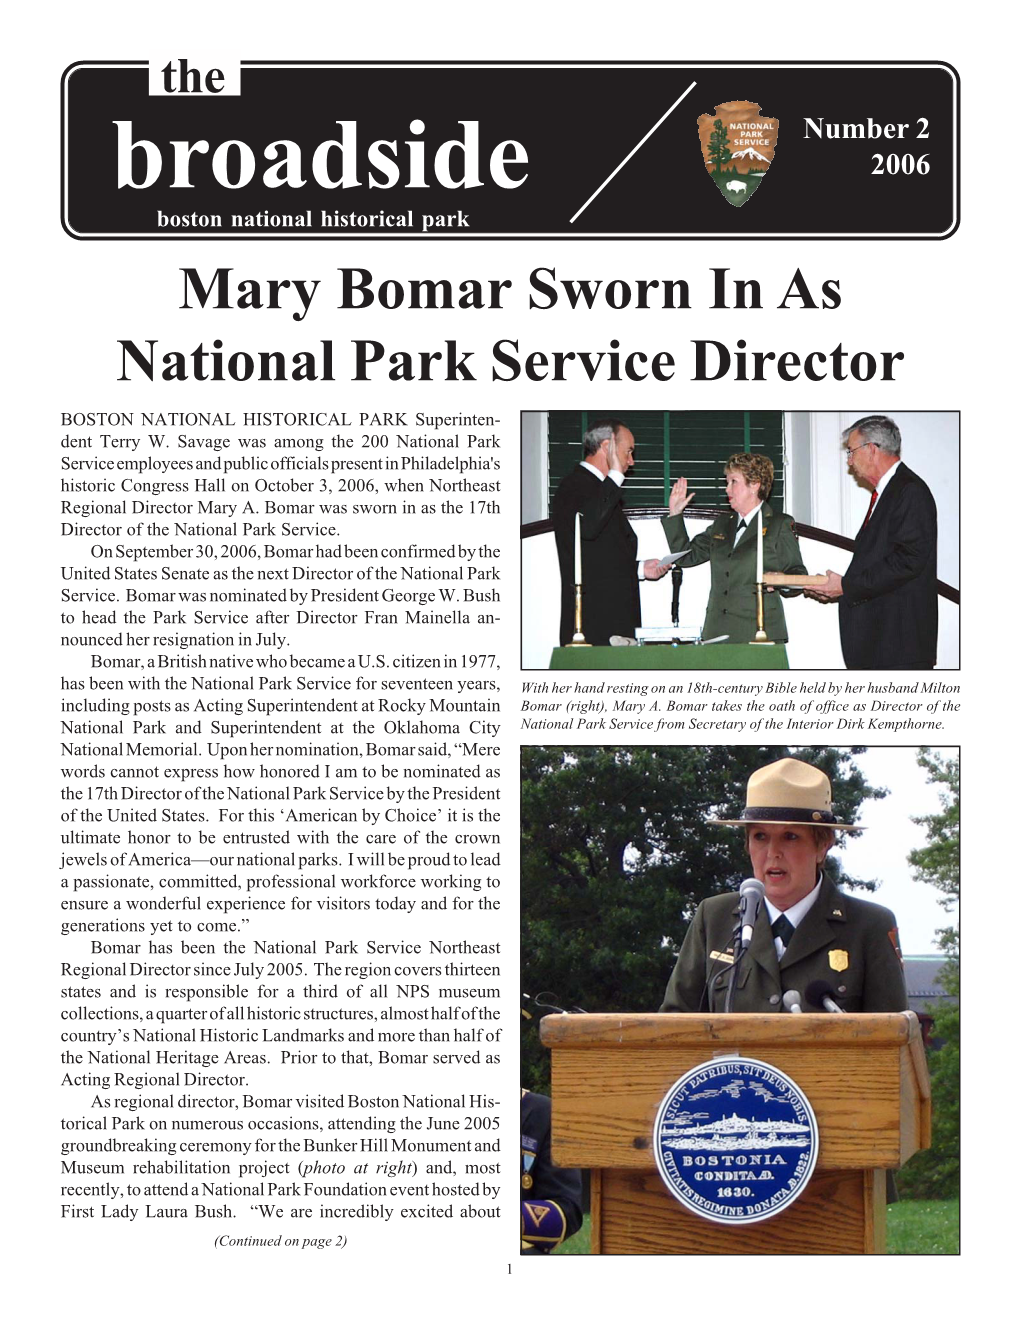 Broadside 2006 Boston National Historical Park Mary Bomar Sworn in As National Park Service Director